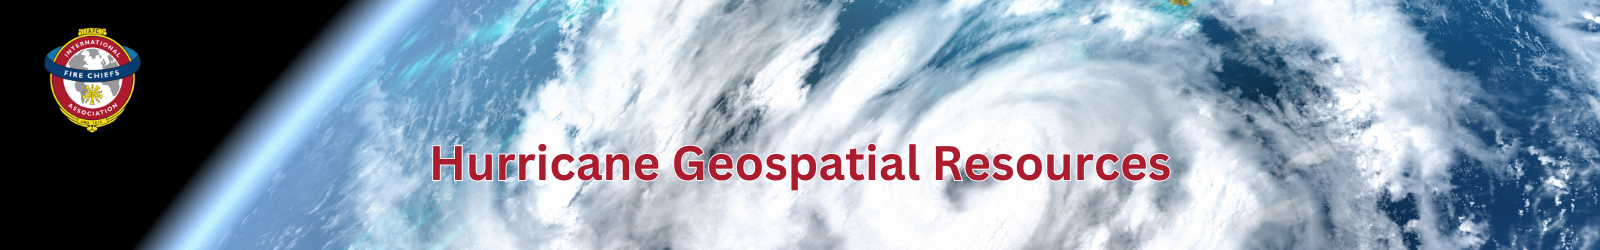 Hurricane Geospatial Resources